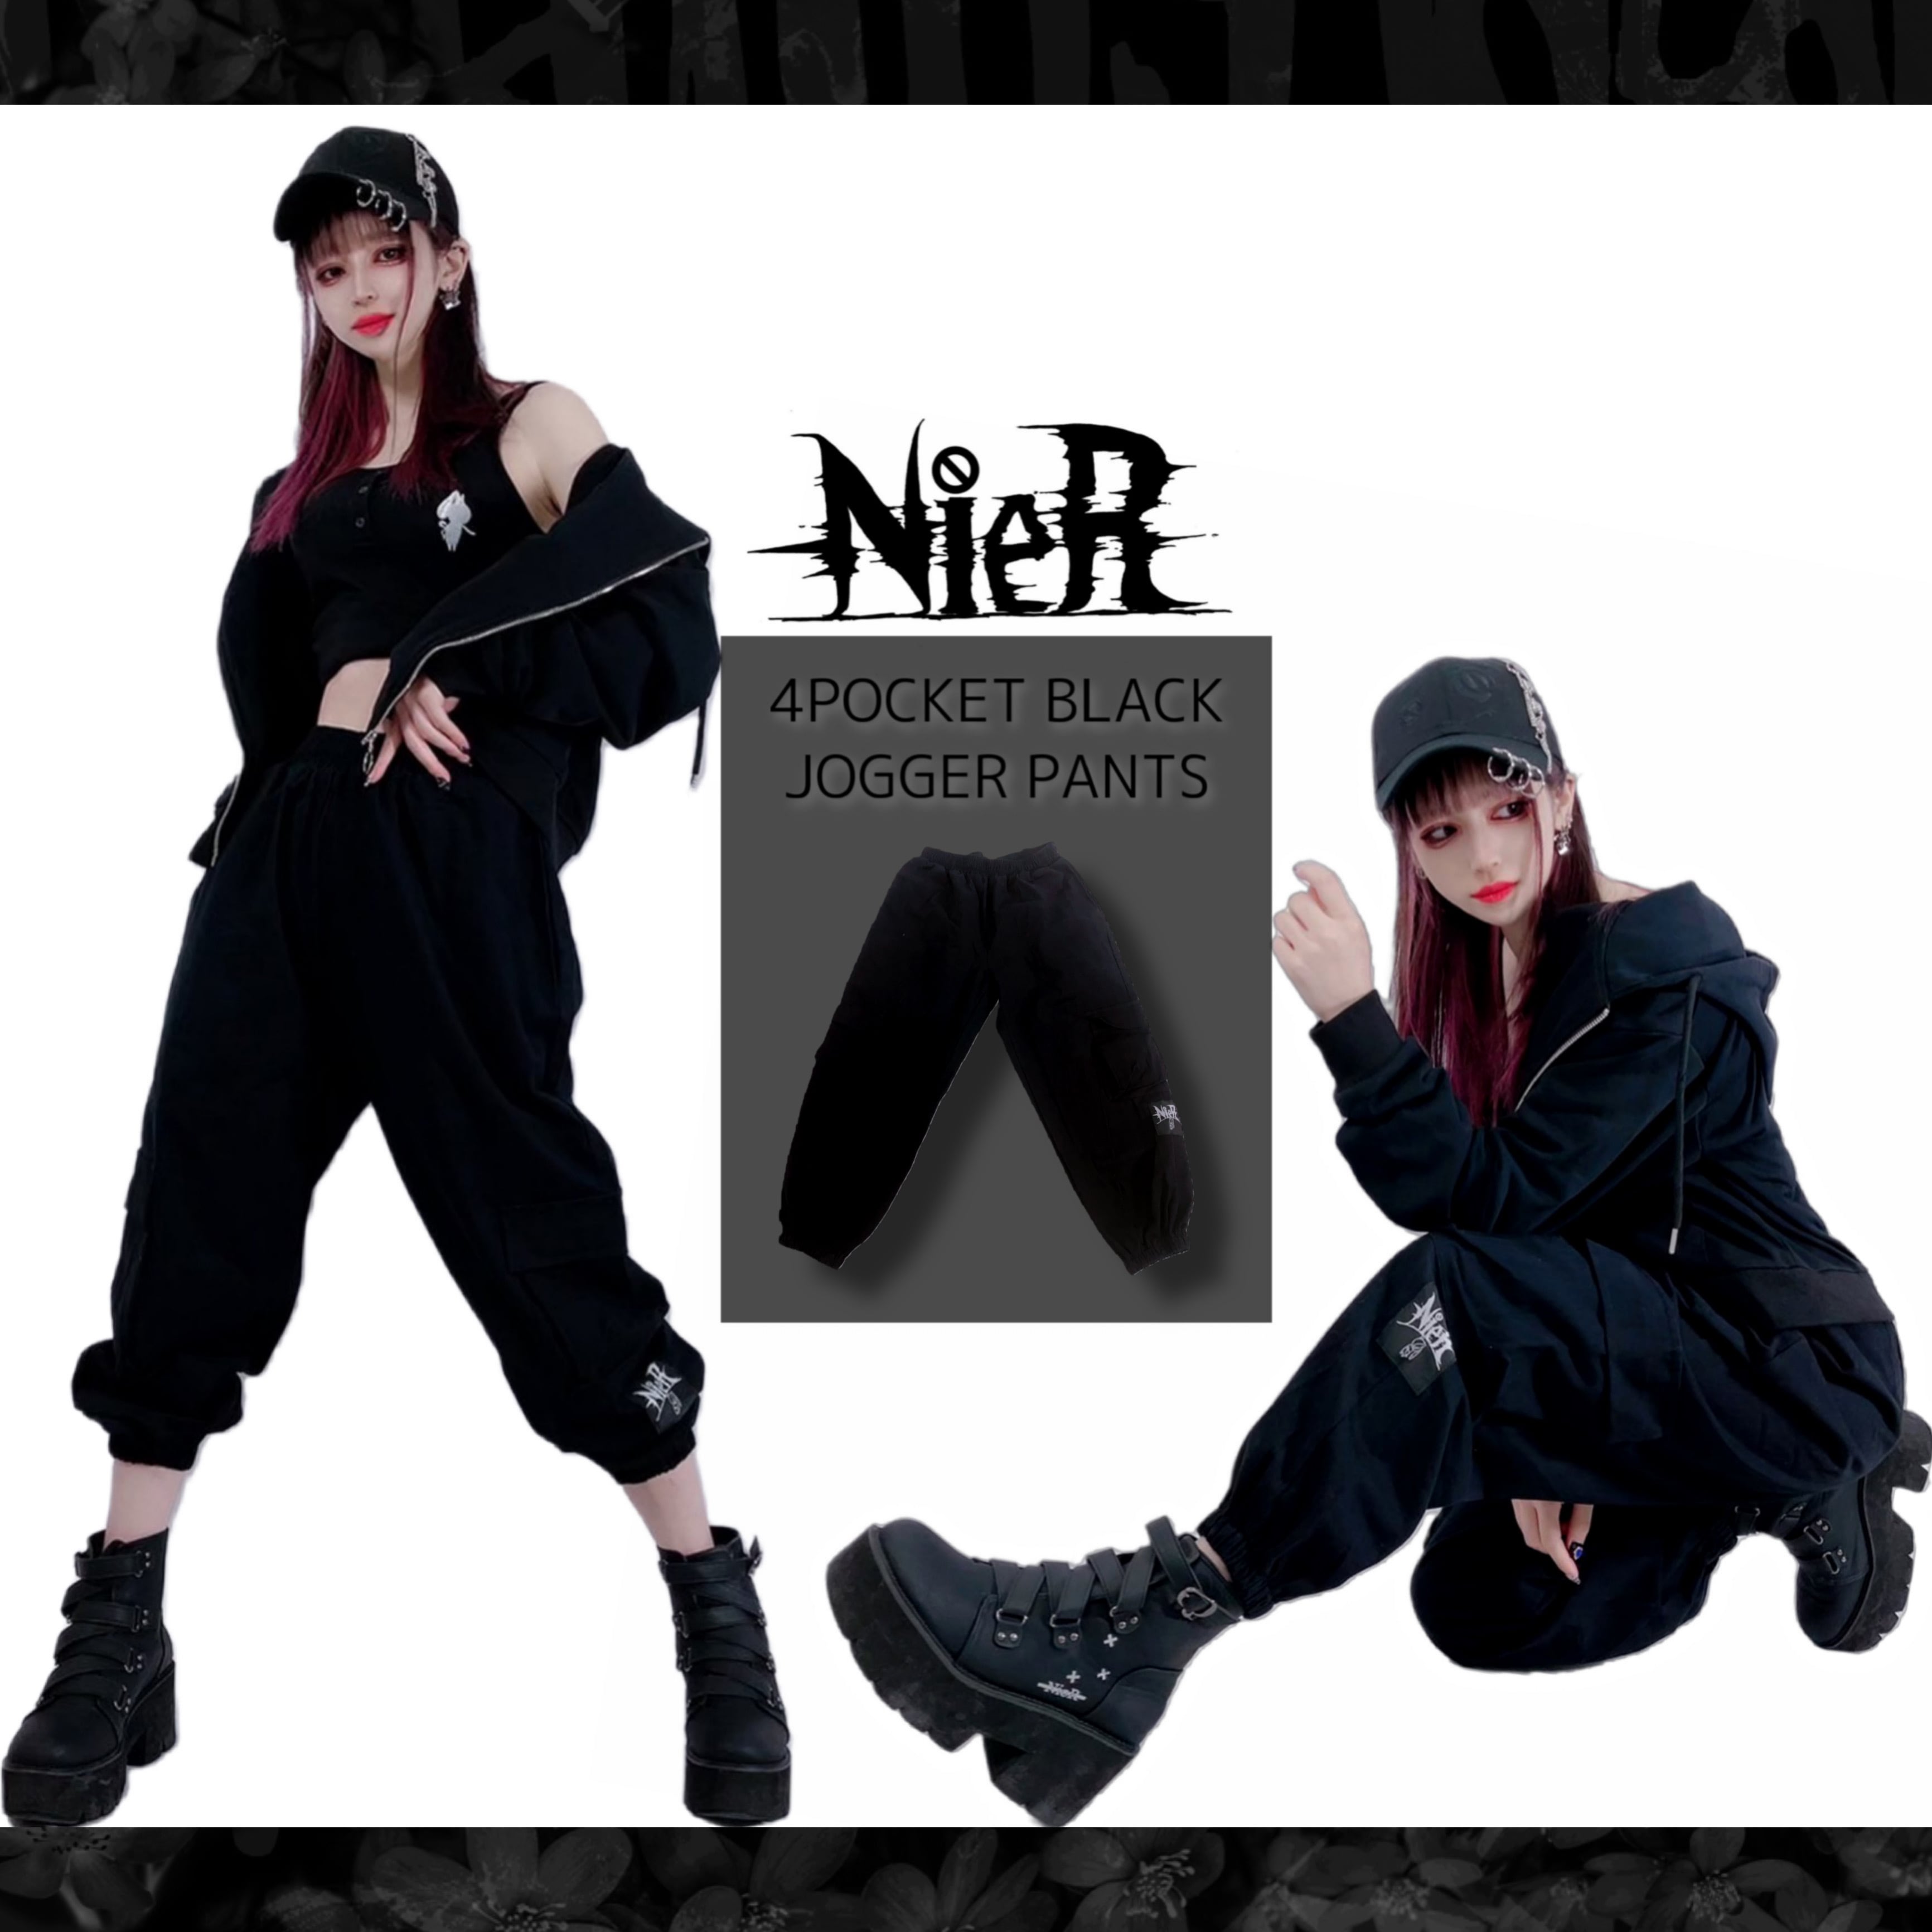 4POCKET BLACK JOGGER PANTS | NIER CLOTHING powered by BASE